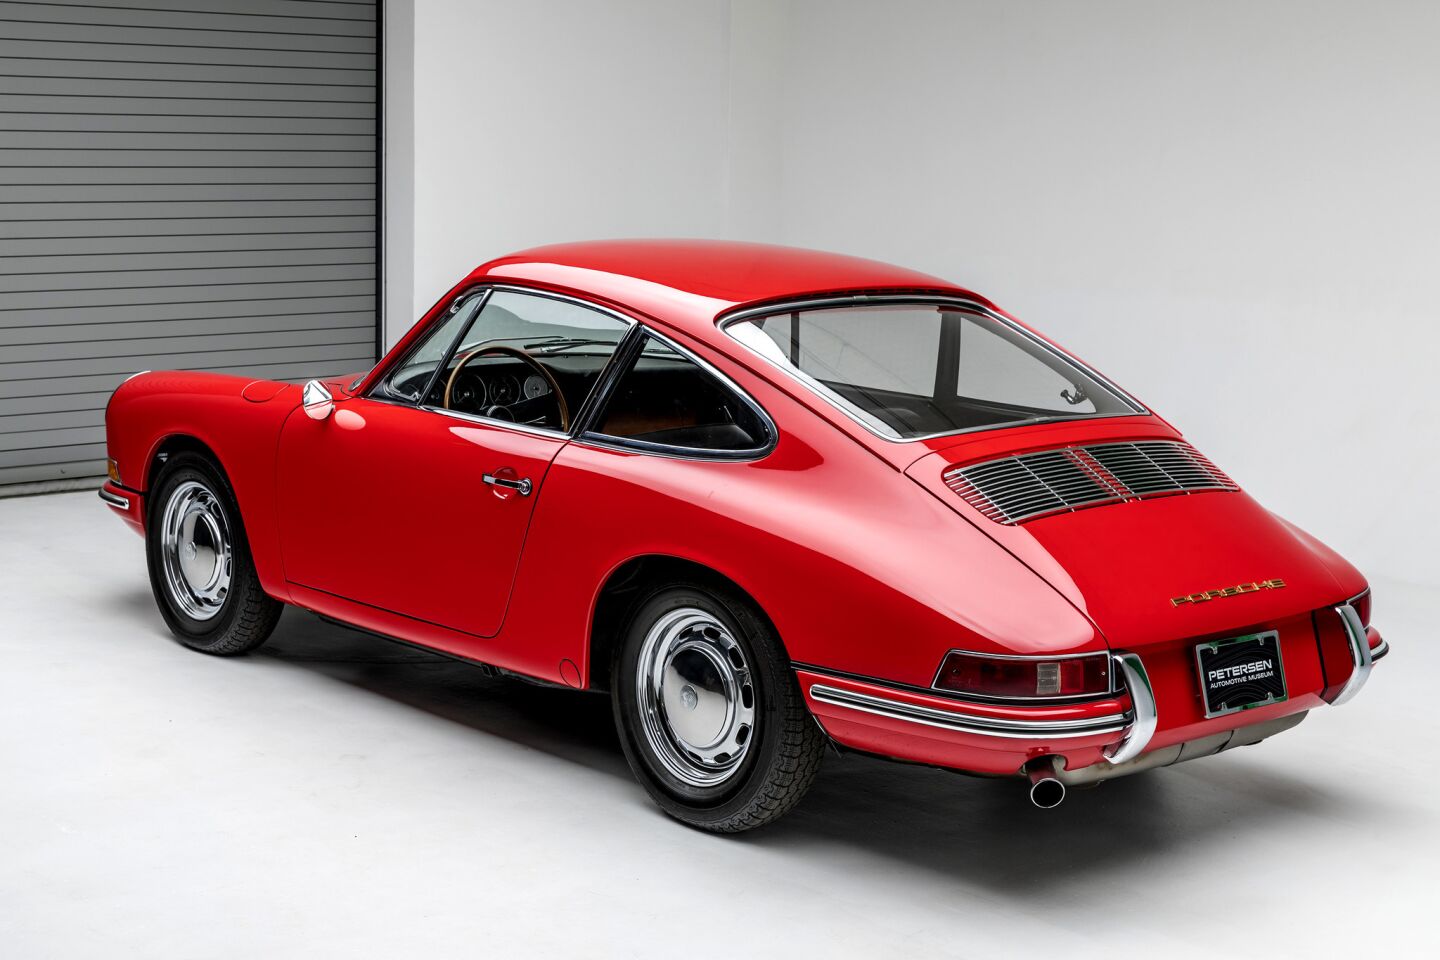 'Porsche Effect' exhibit opens at Petersen Automotive Museum